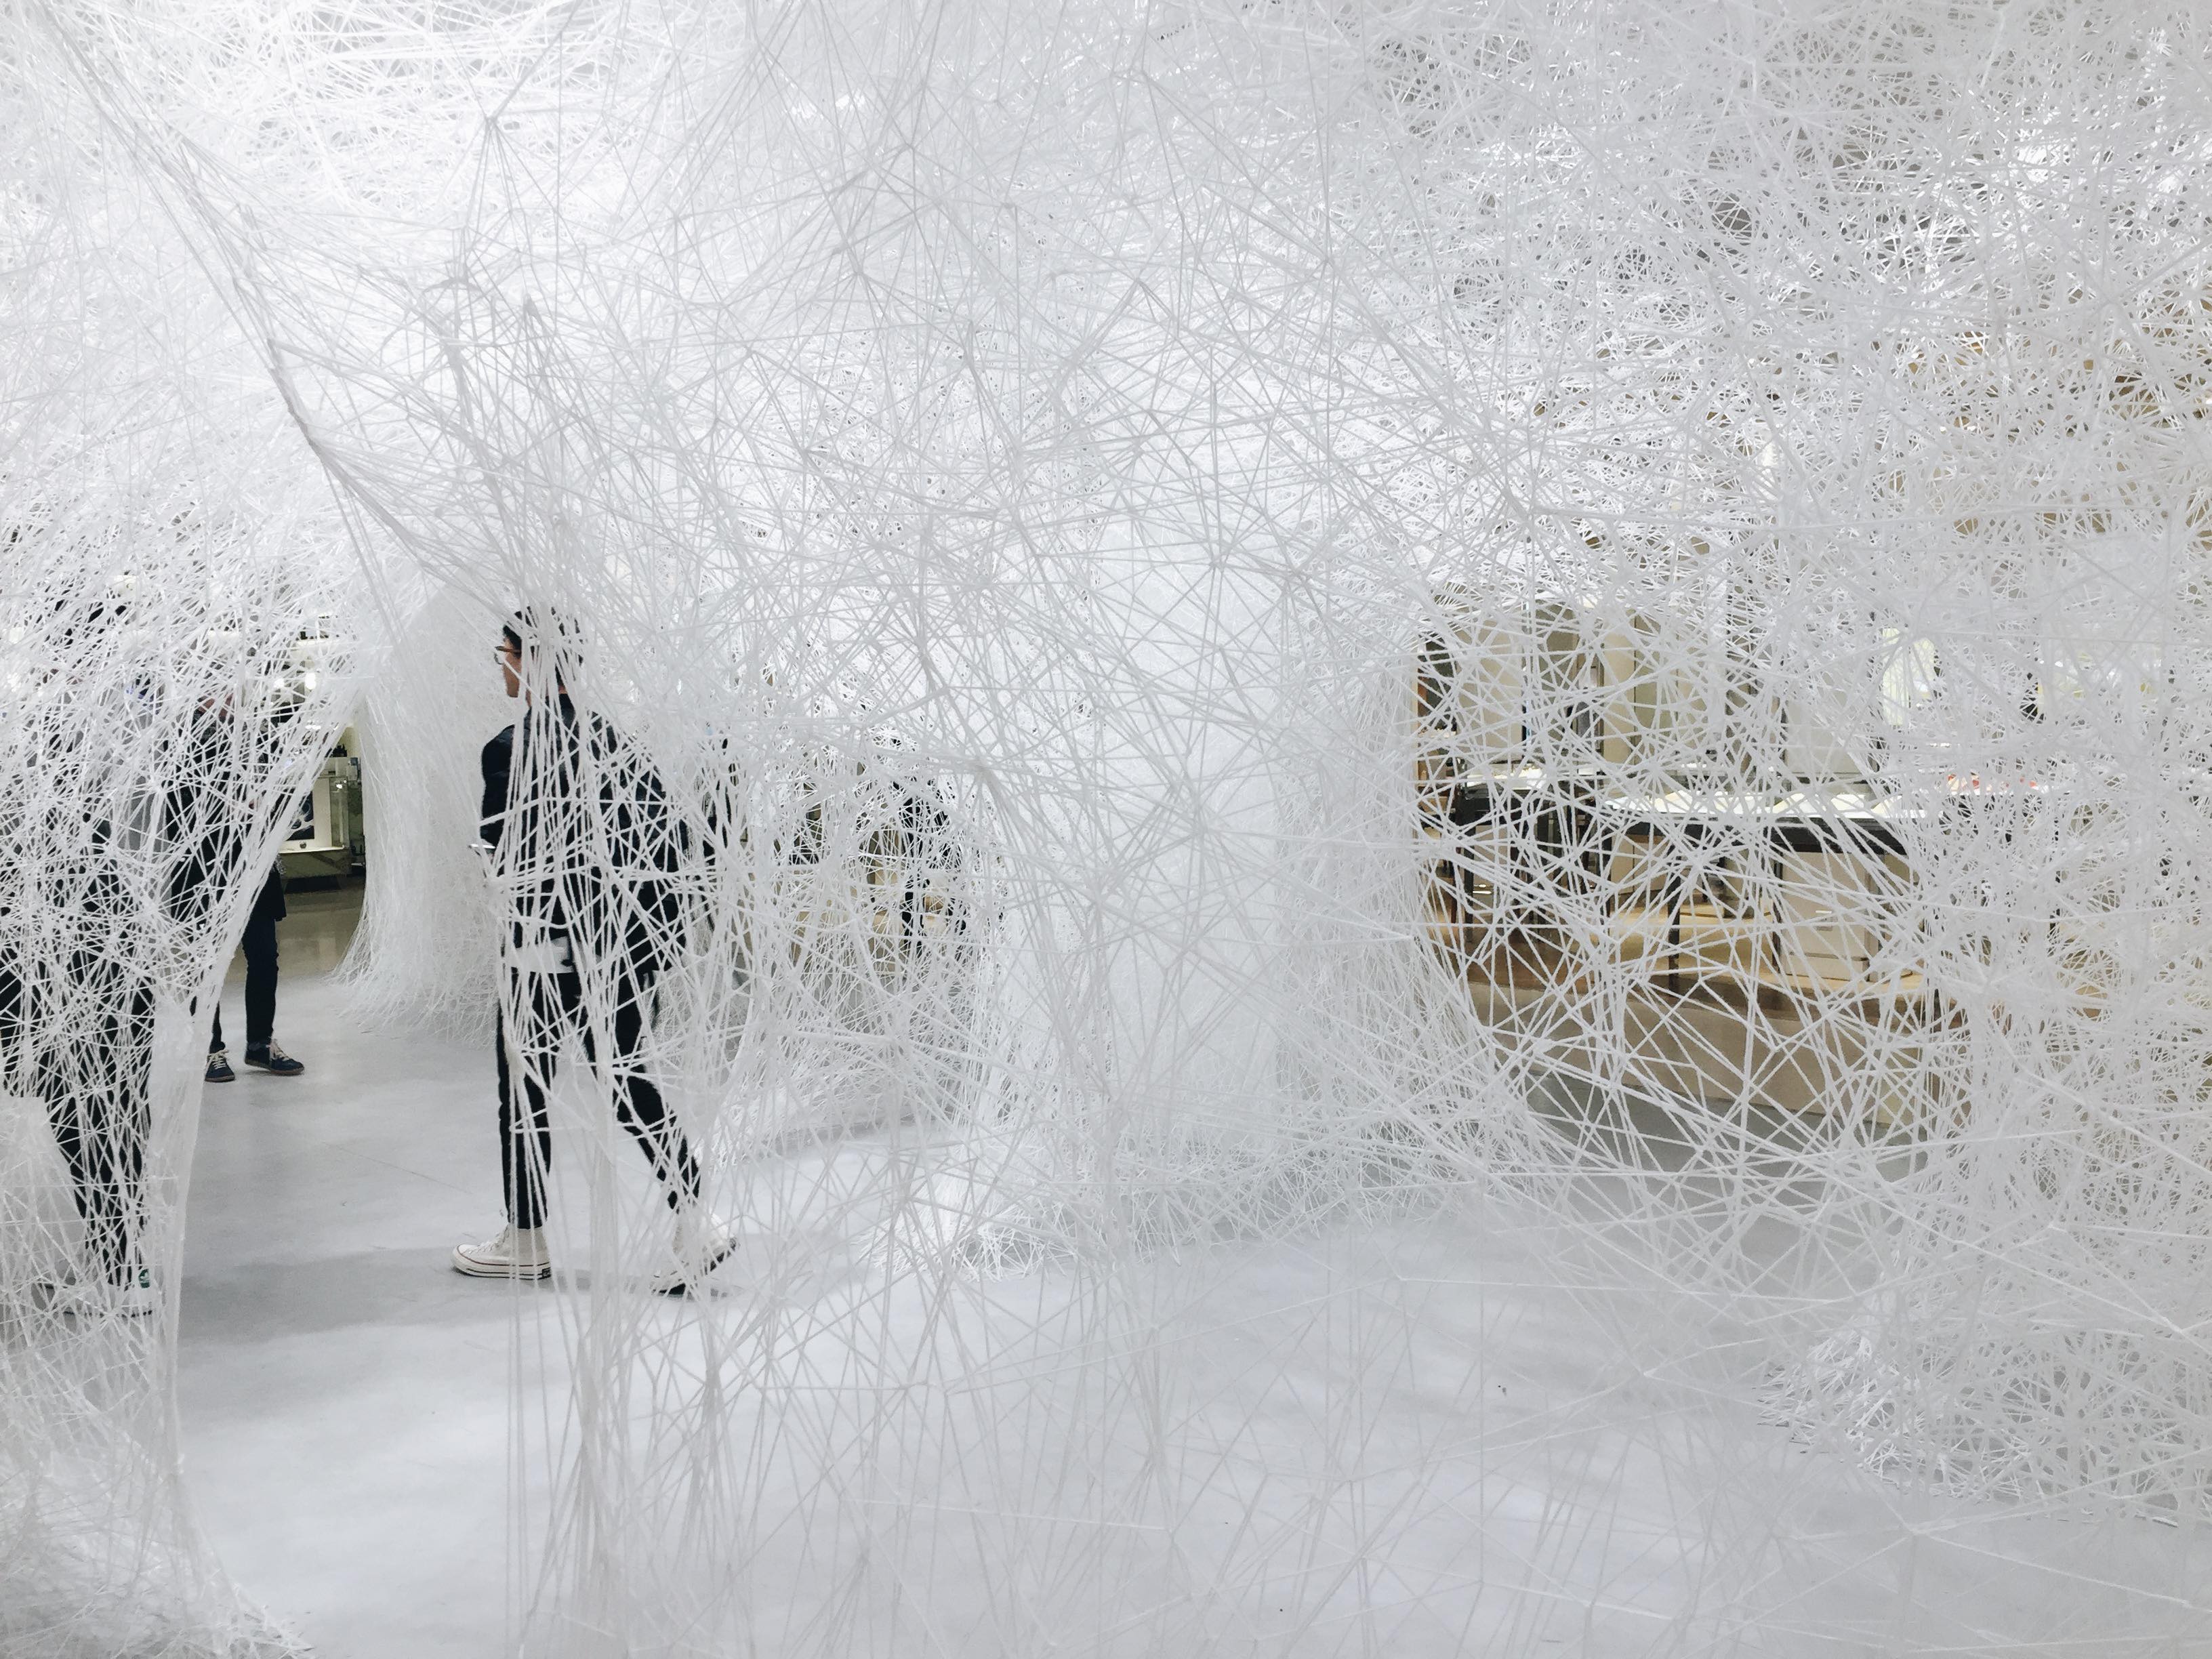 The installation artwork by Japanese artist Shiota Chiharu